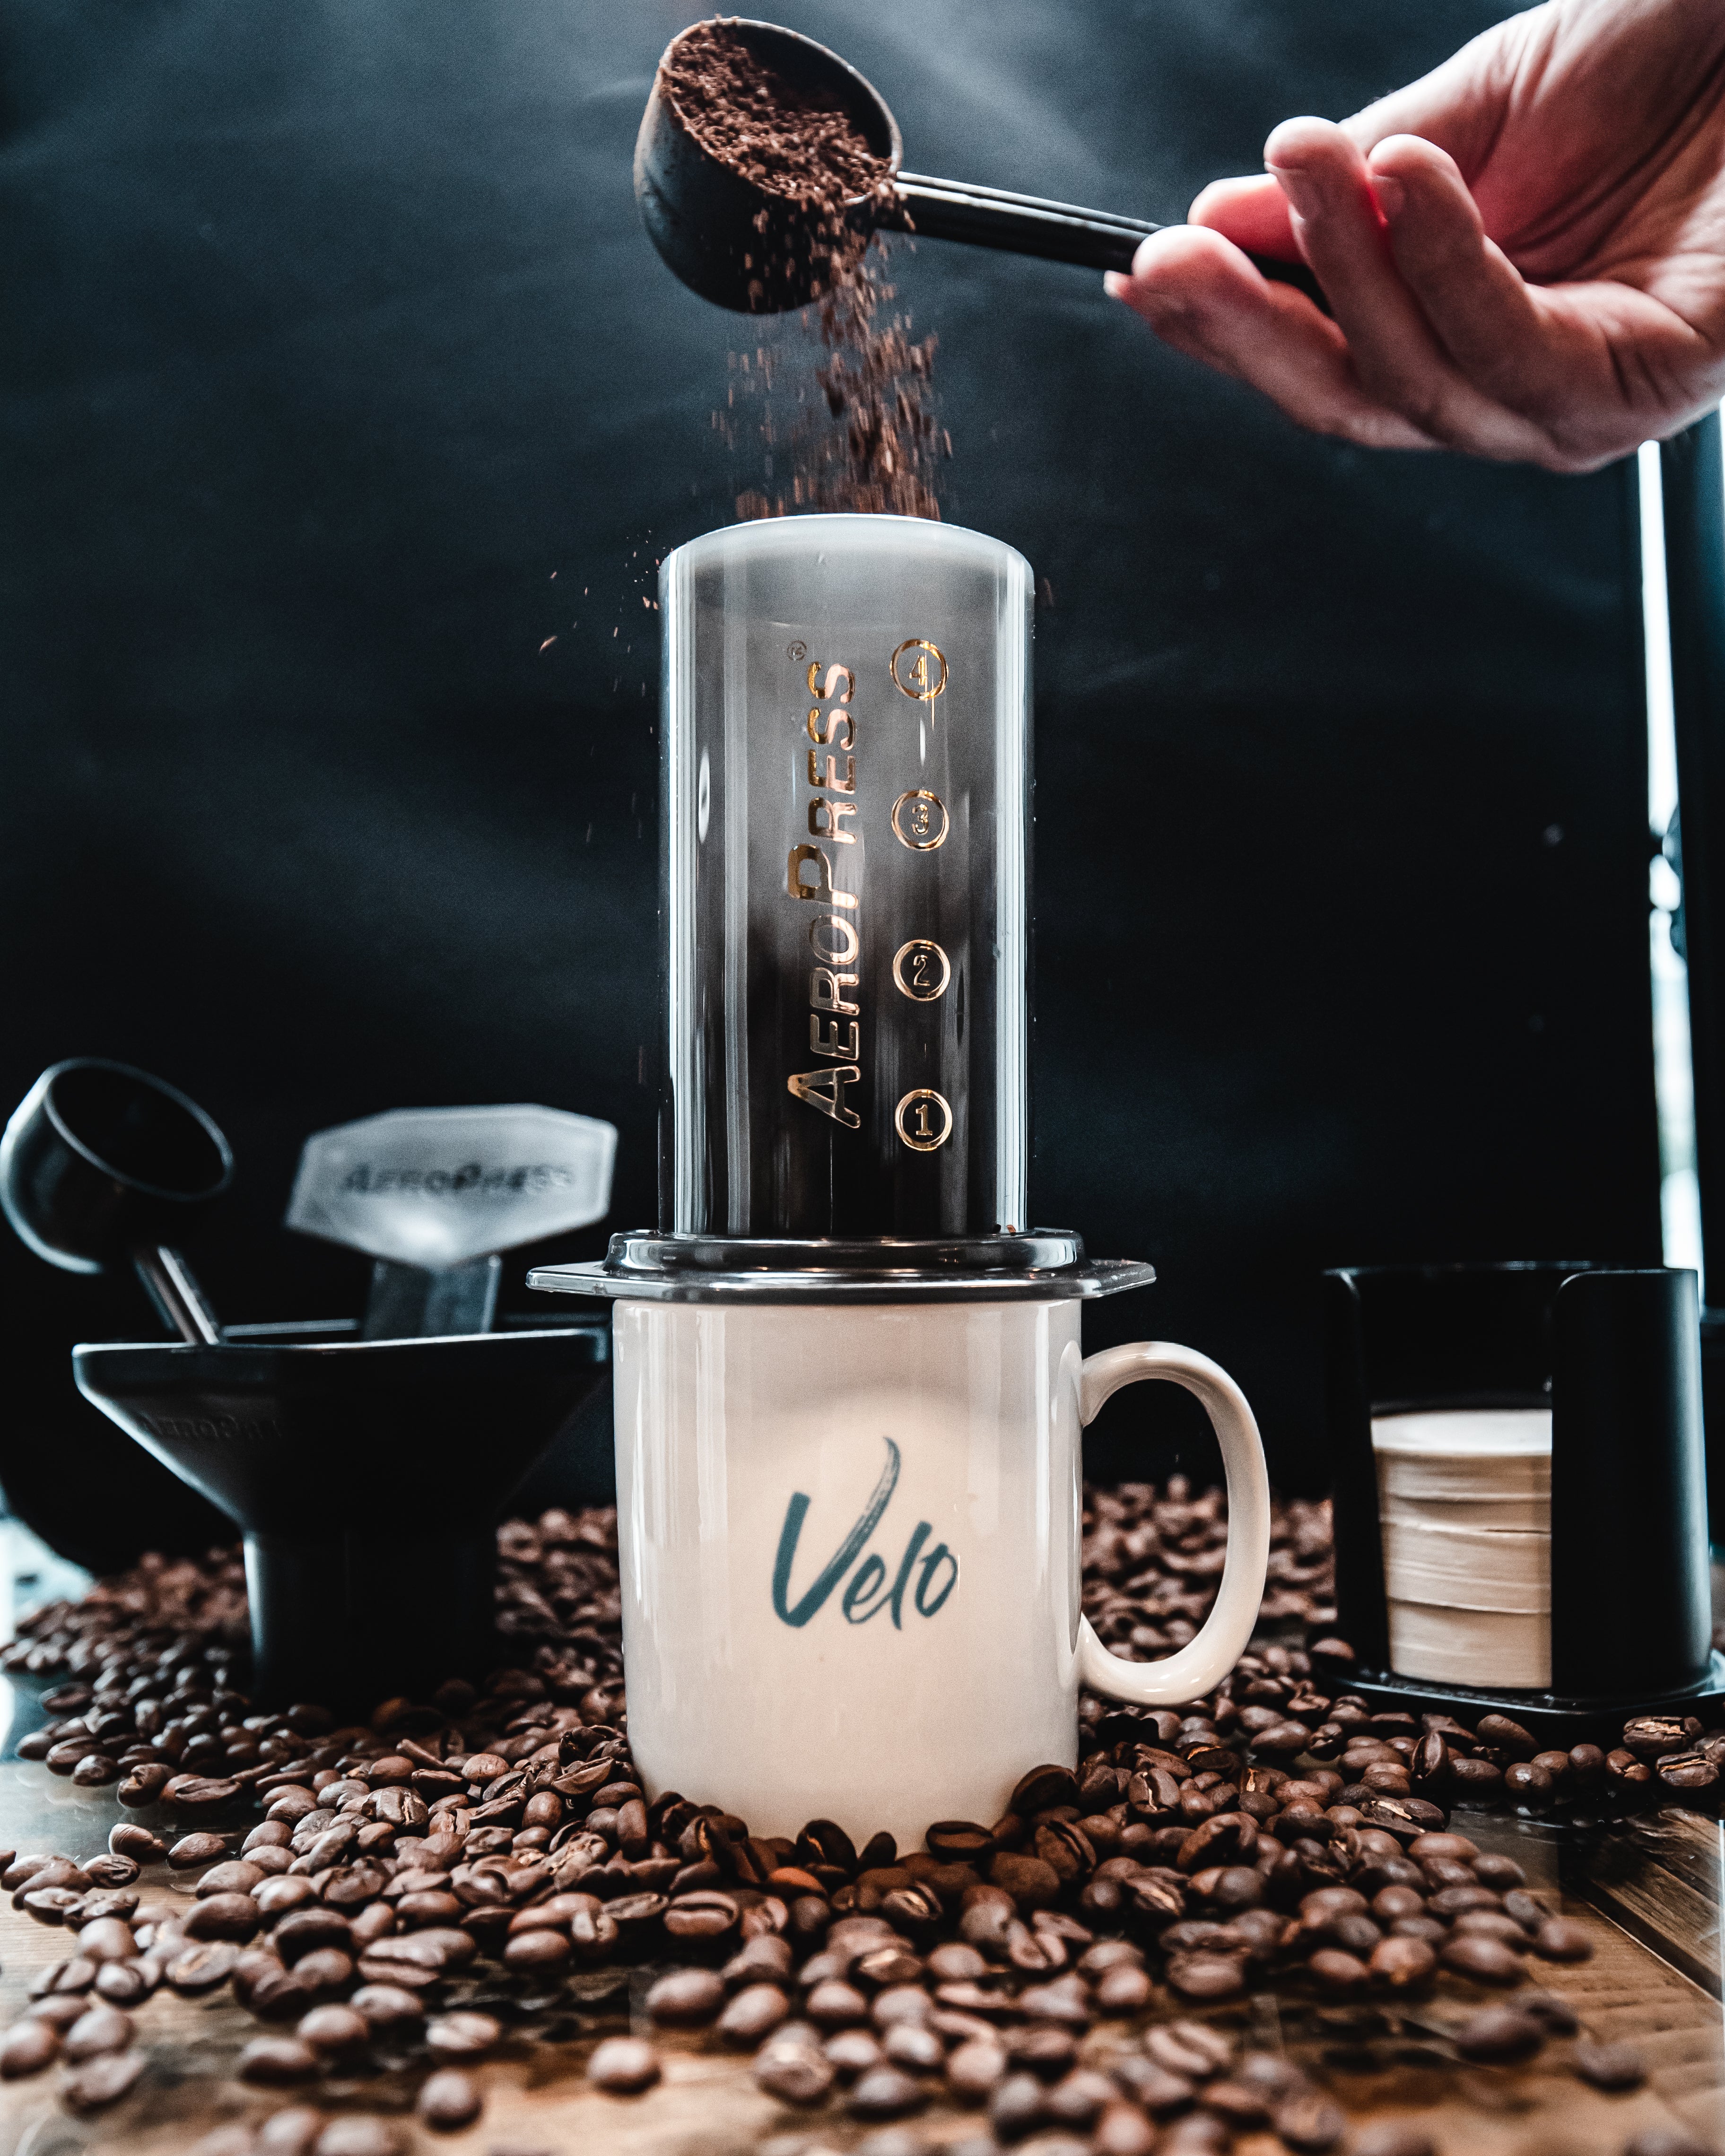 Brewing Velo Coffee in an AeroPress